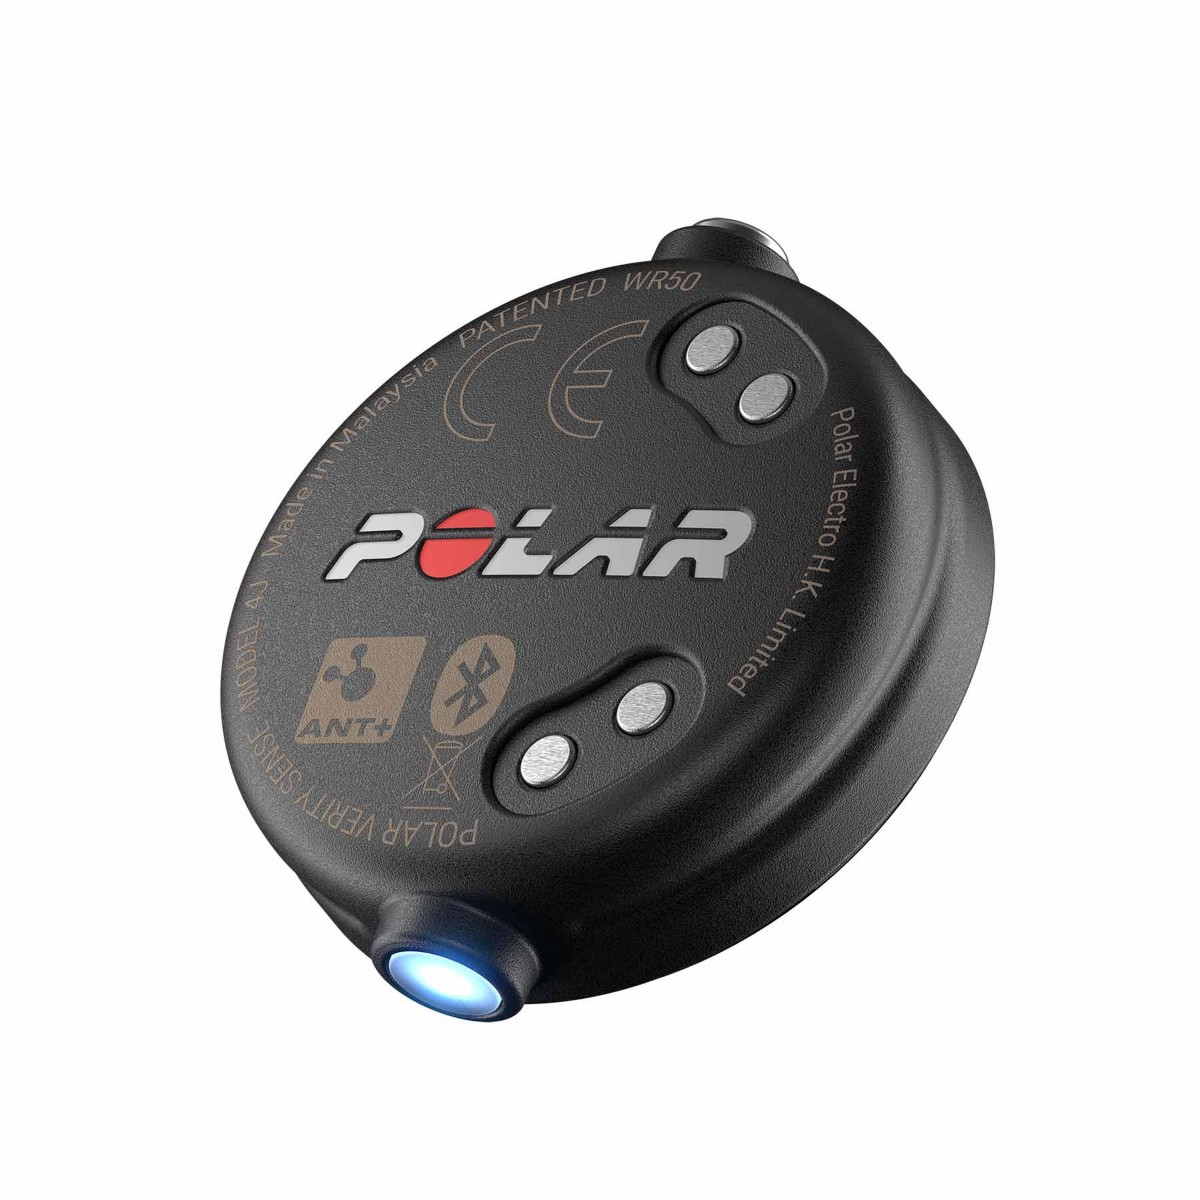 Verity Sense - Multi-sport optical heart rate sensor POLAR - Decathlon